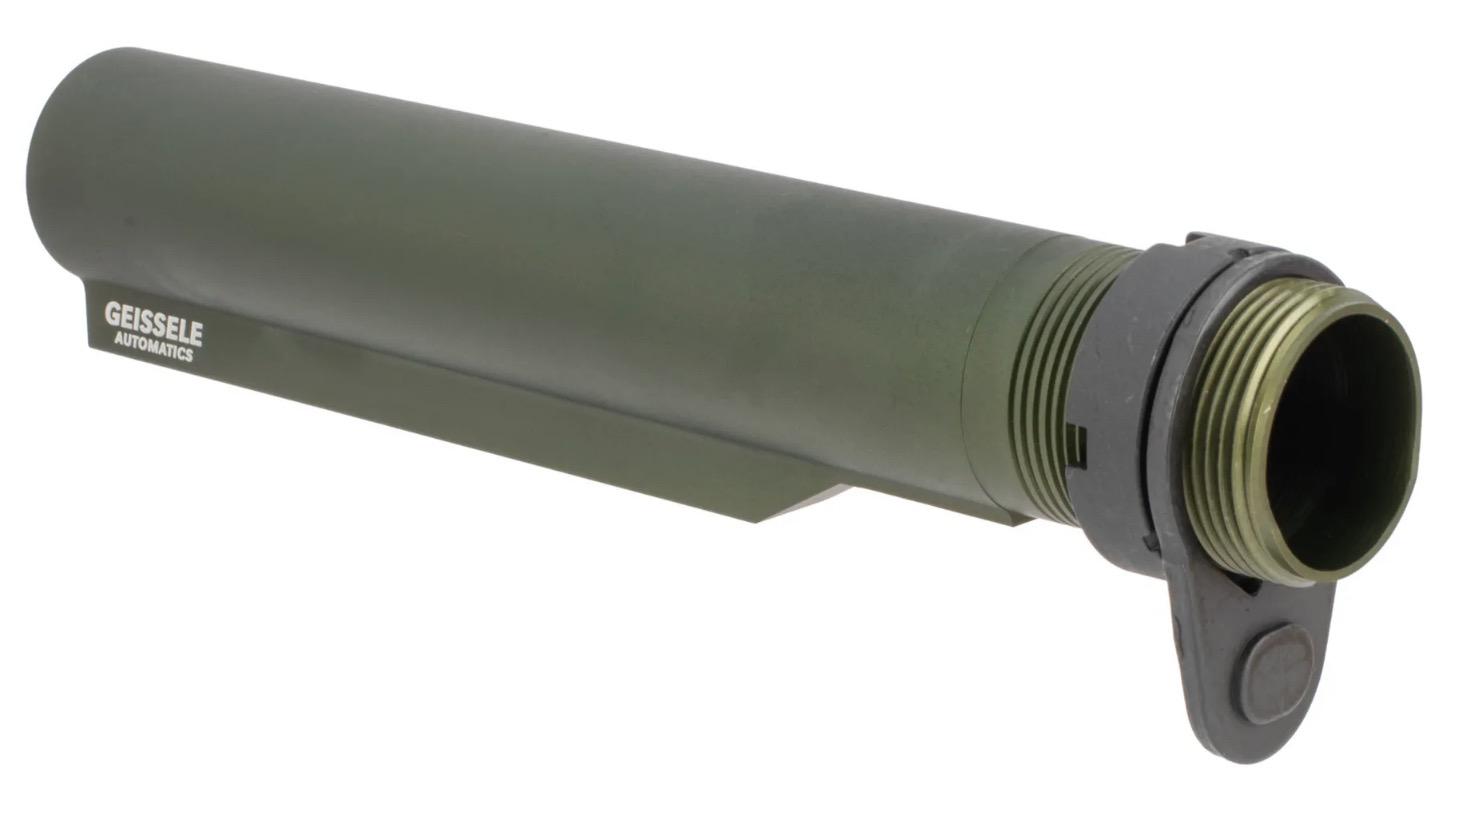 Geissele Automatics Premium Mil-Spec AR-15 Buffer Tube OD Green - $54.99